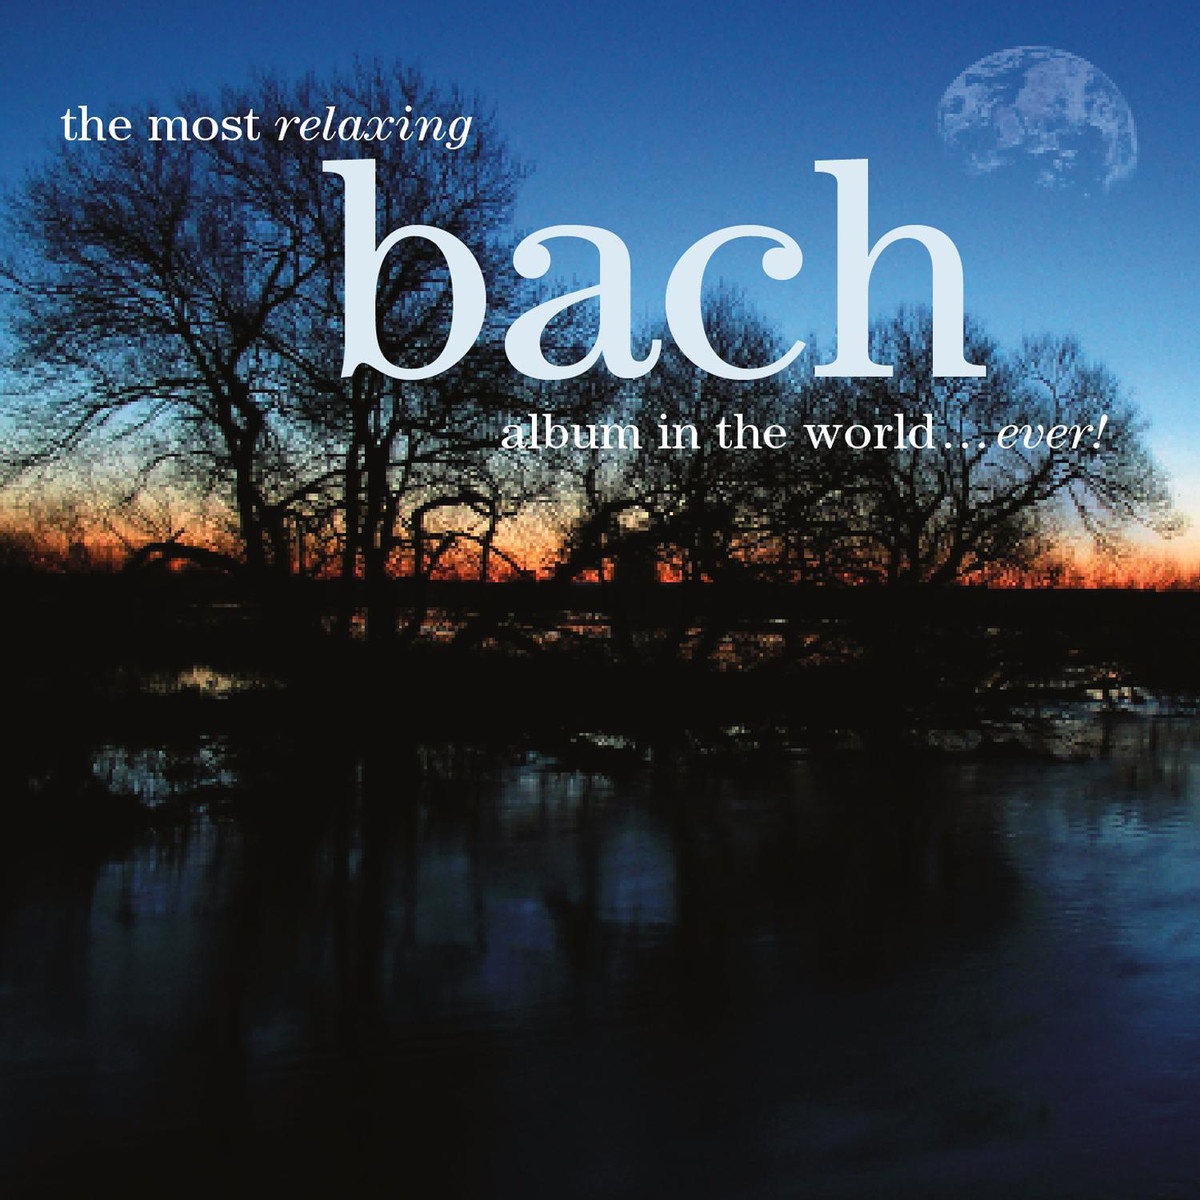 Christmas Oratorio BWV248 (arr. Stokowski) (1997 Digital Remaster): Sinfonia